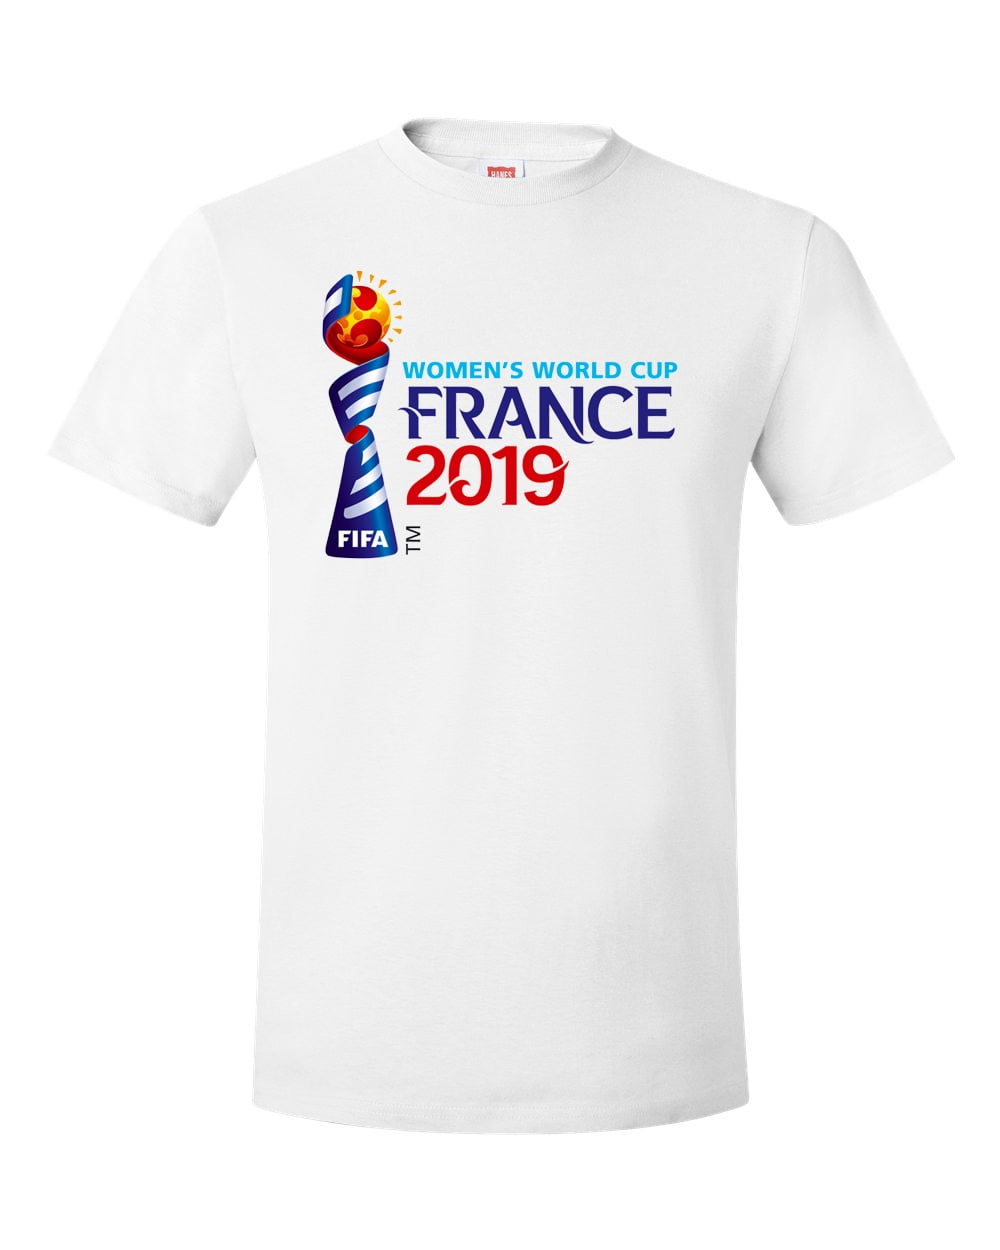 Custom Apparel R Us World Cup France 2019 Unisex Graphic Tees Short Sleeve